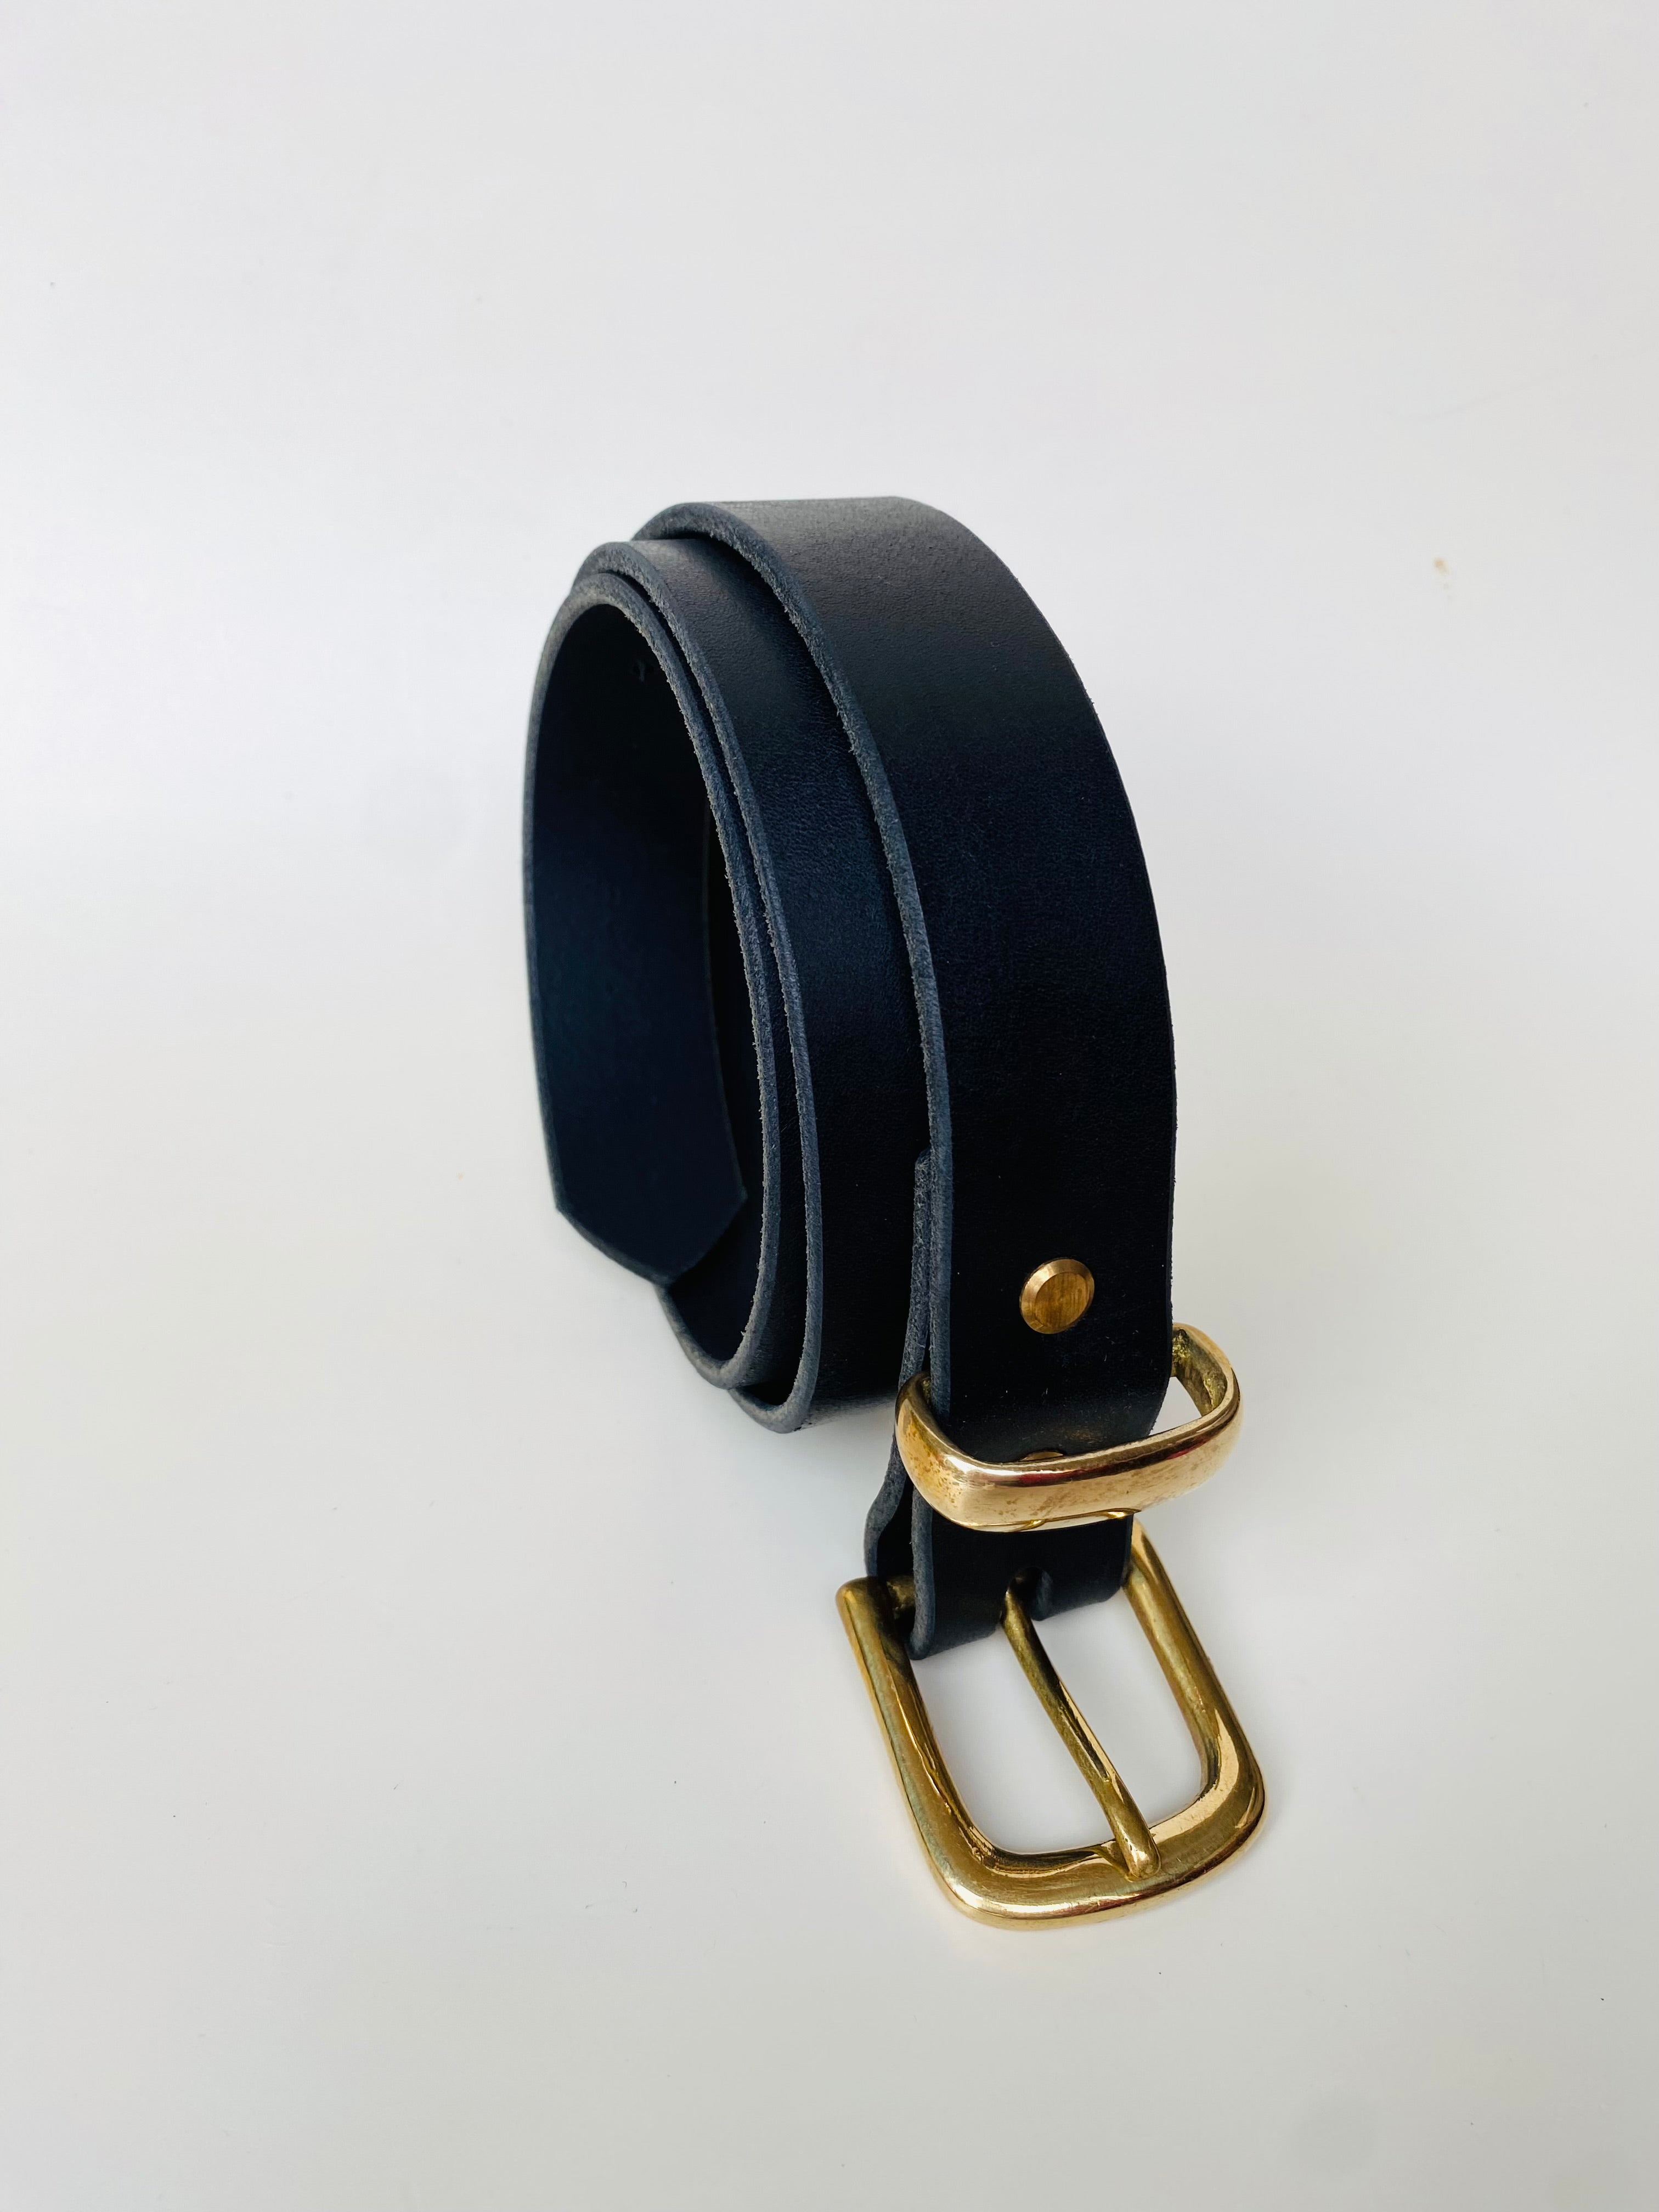 Handmade Leather Belt - Wide